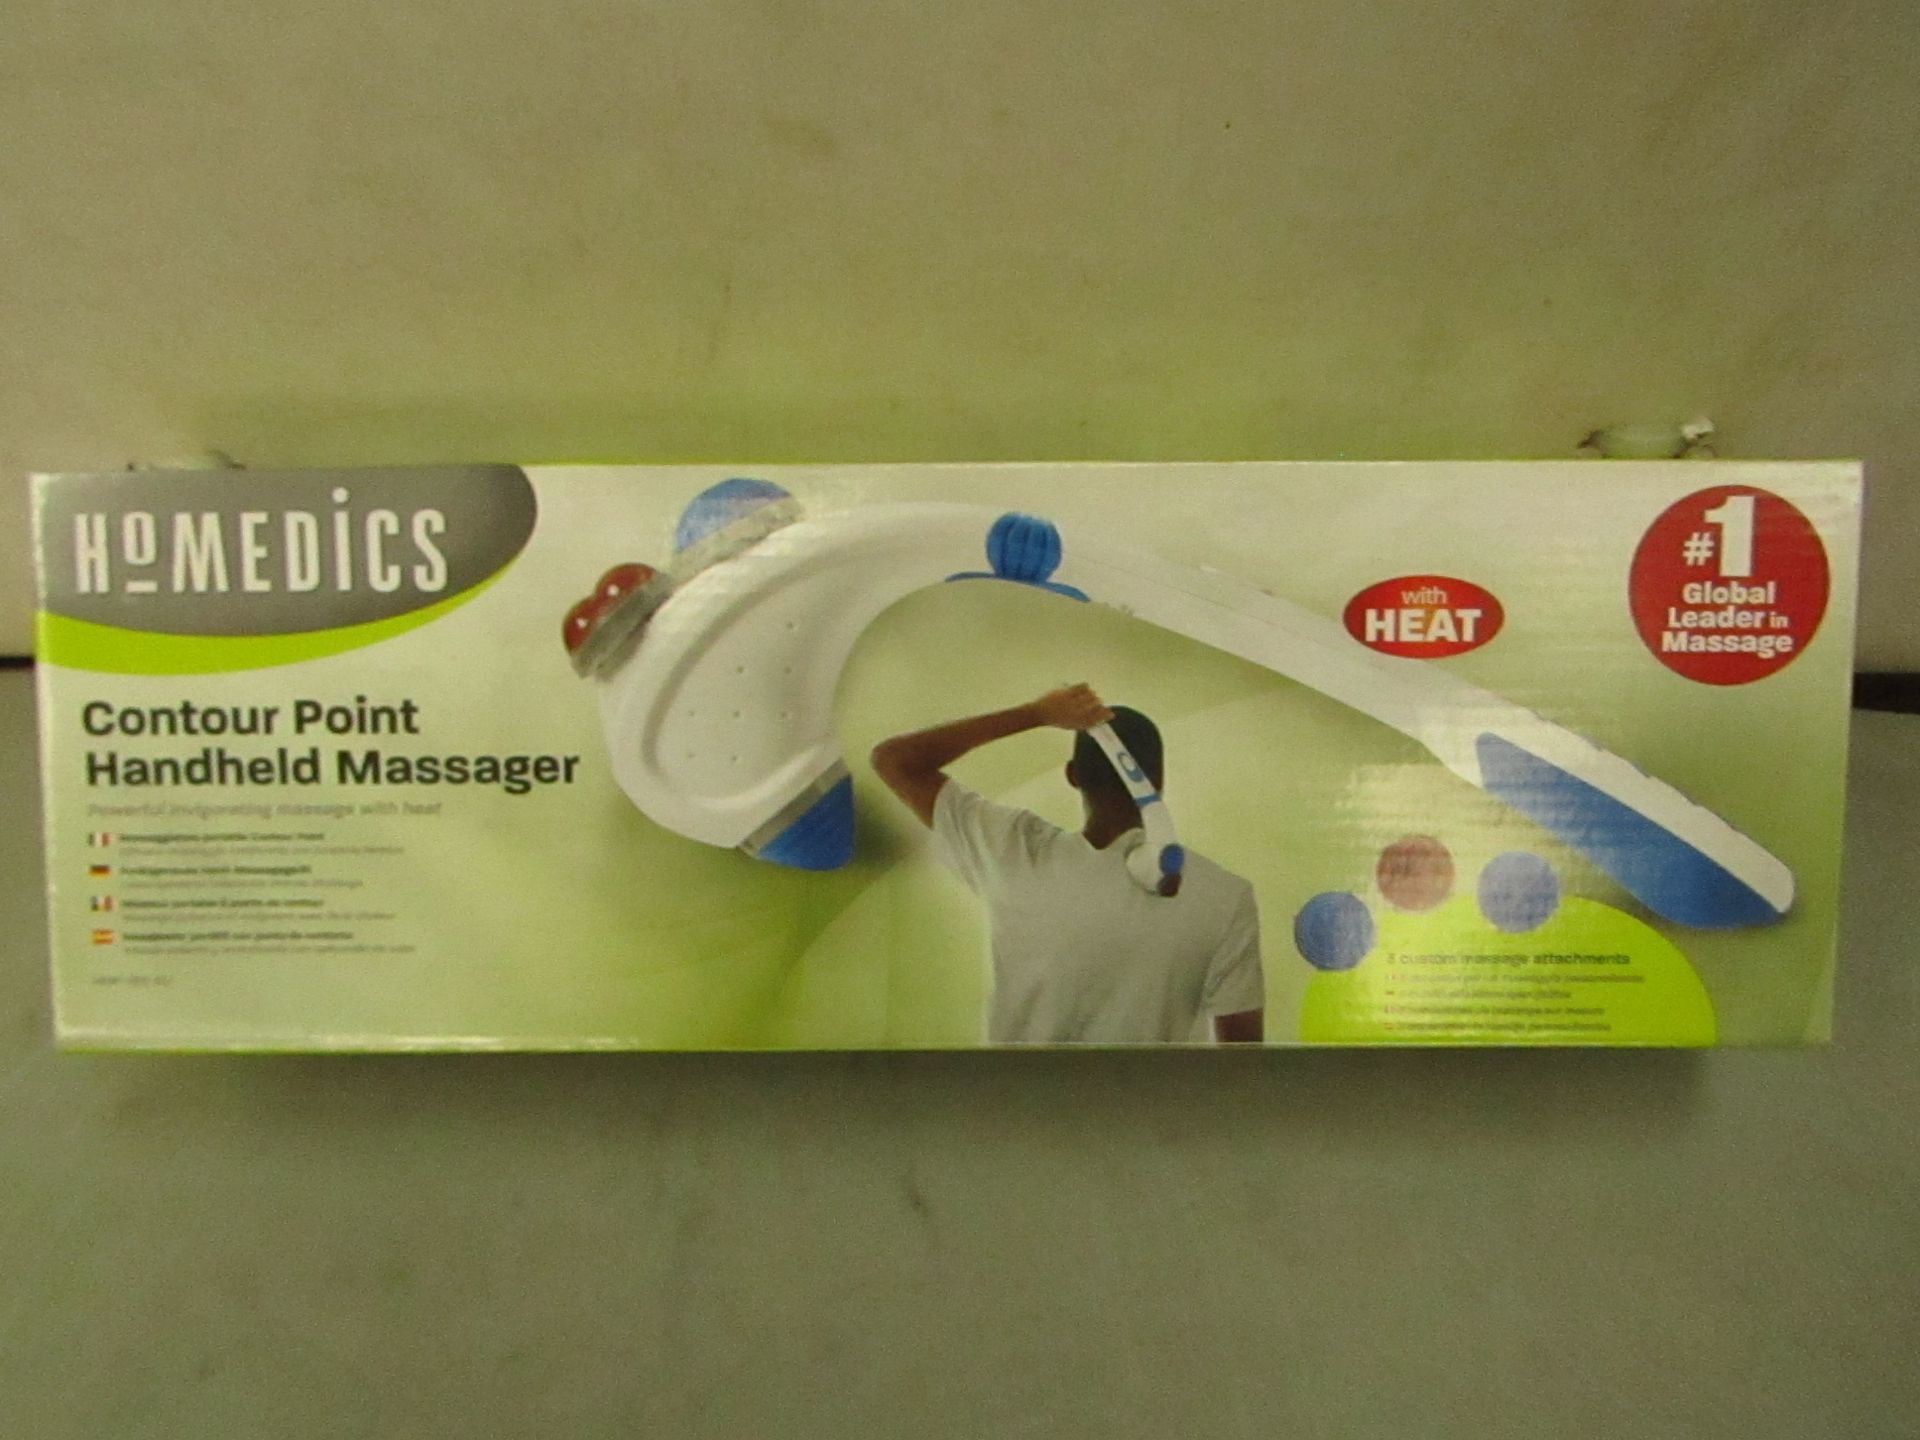 Homedics - Contour Point Handheld Massager - Unused & Boxed.